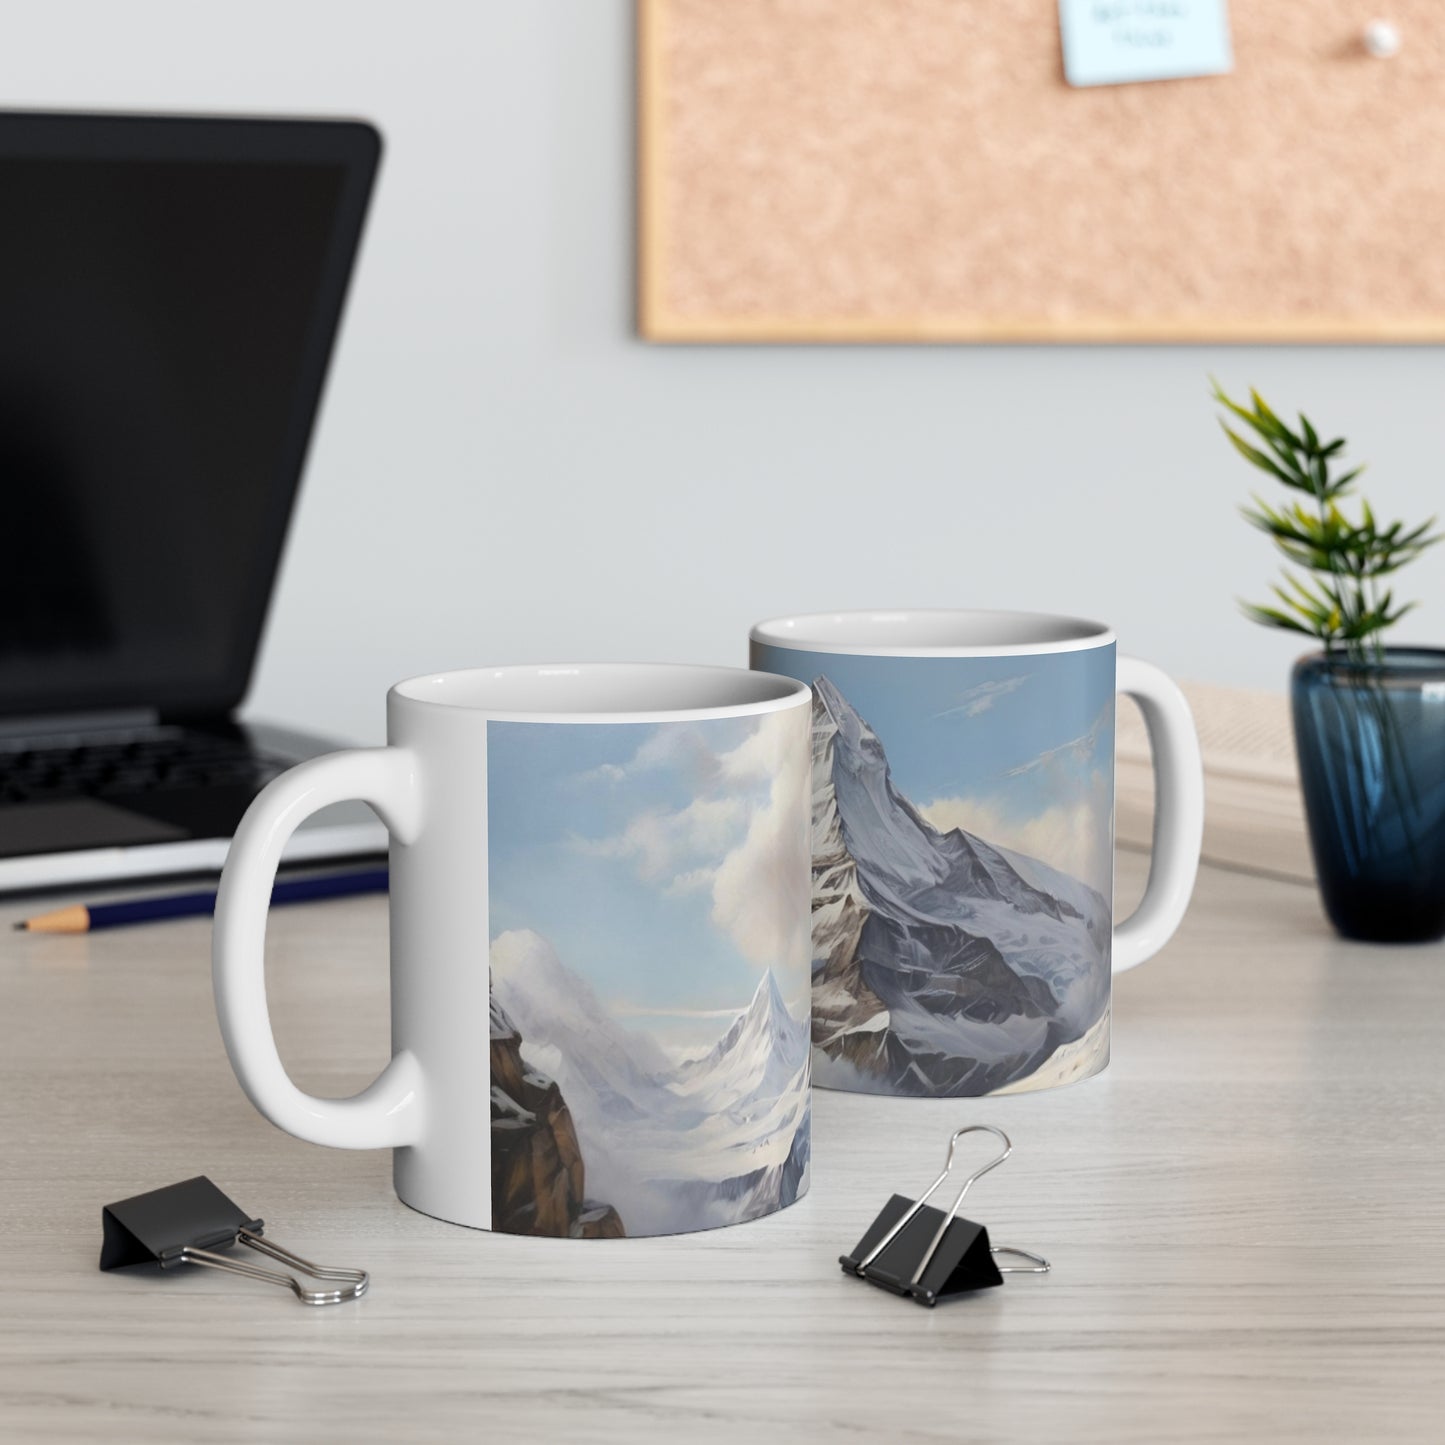 Matterhorn Mountain Artwork Mug - Ceramic Coffee Mug 11oz